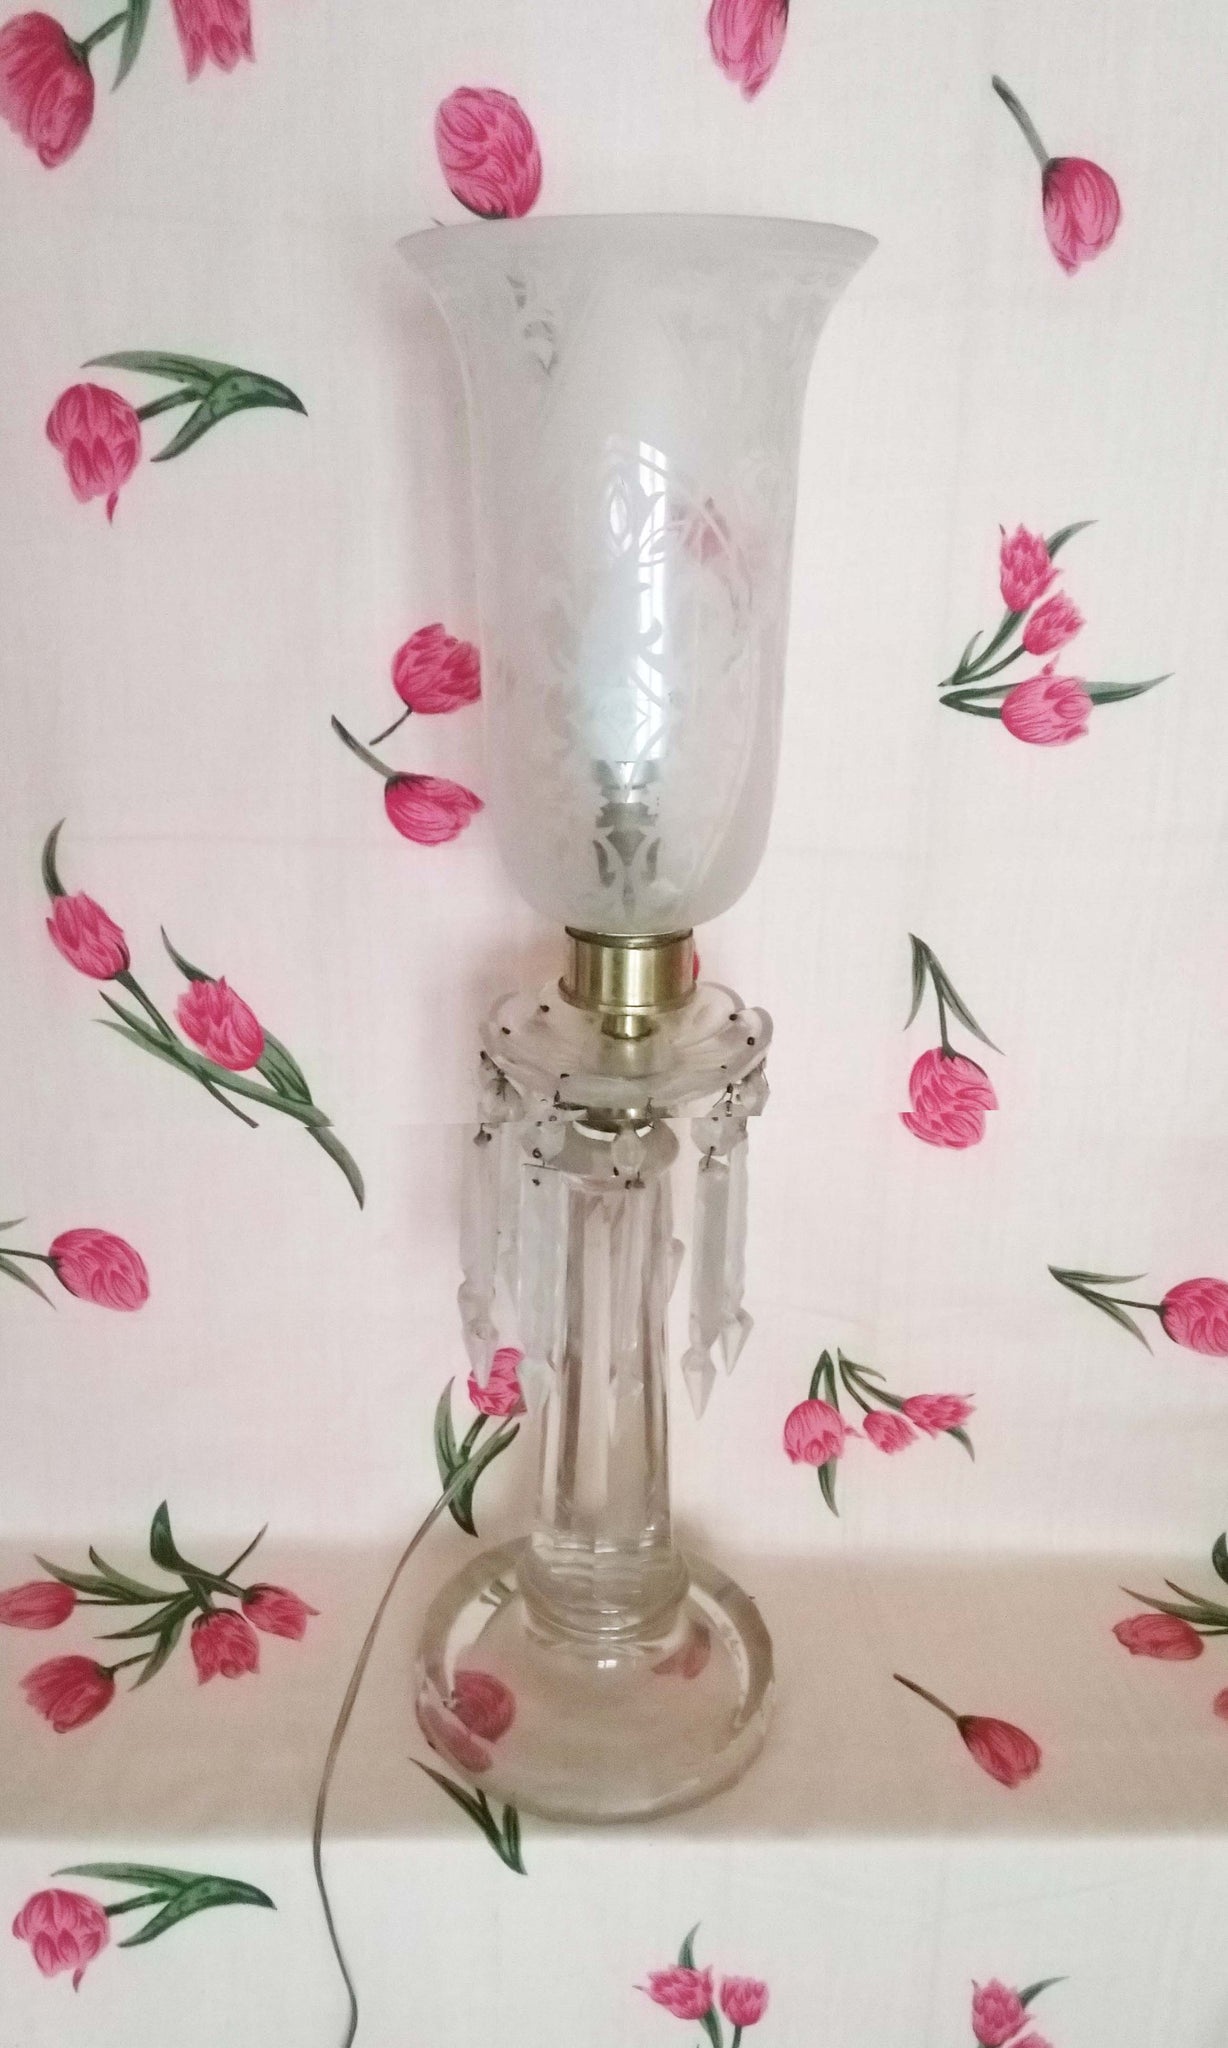 x22 Archaic Crystal Glass Lamp